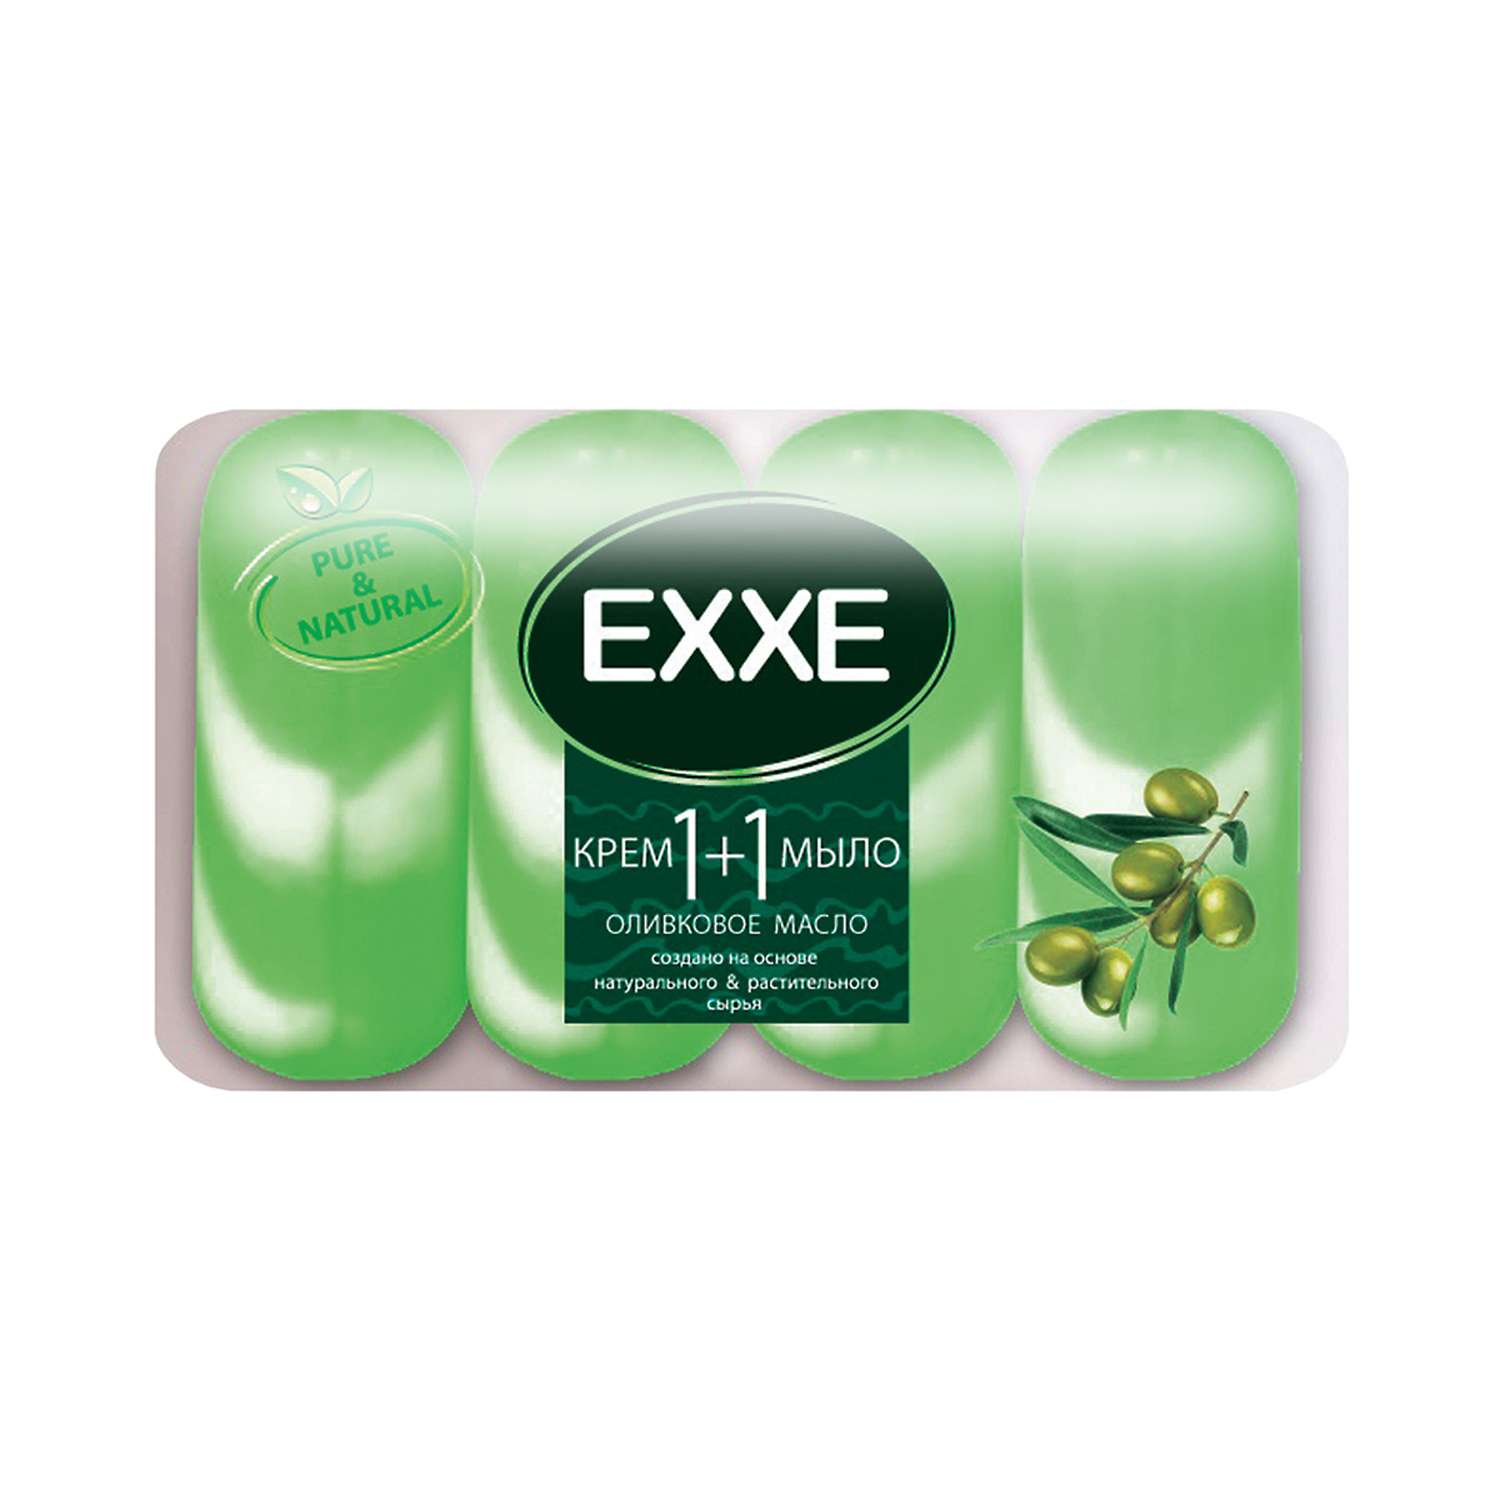 Мыло EXXE оливковое масло 4 шт 90 г - фото 1